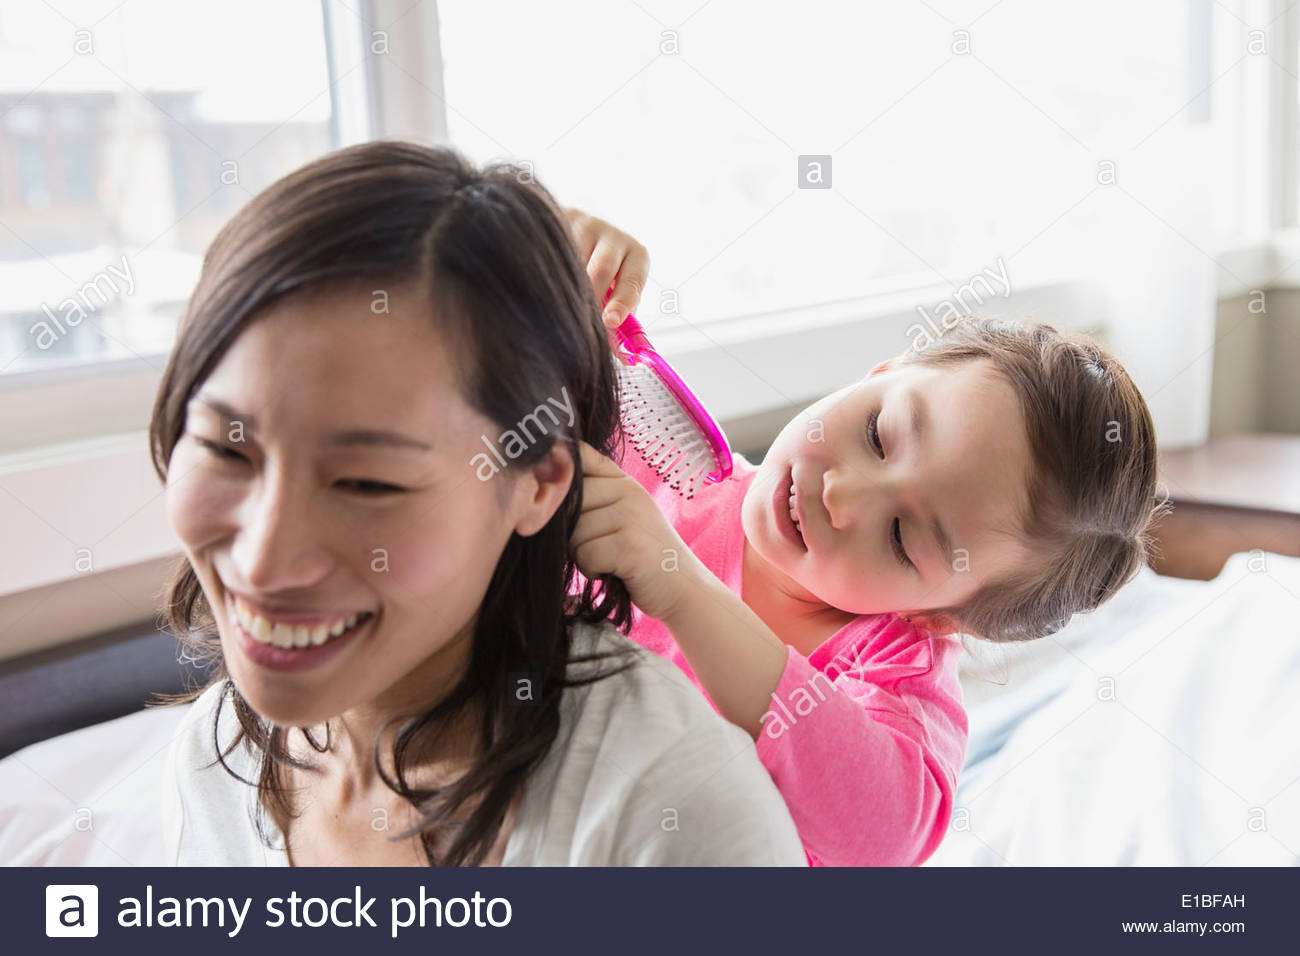 Daughter brushing mothers hair Stock Photo